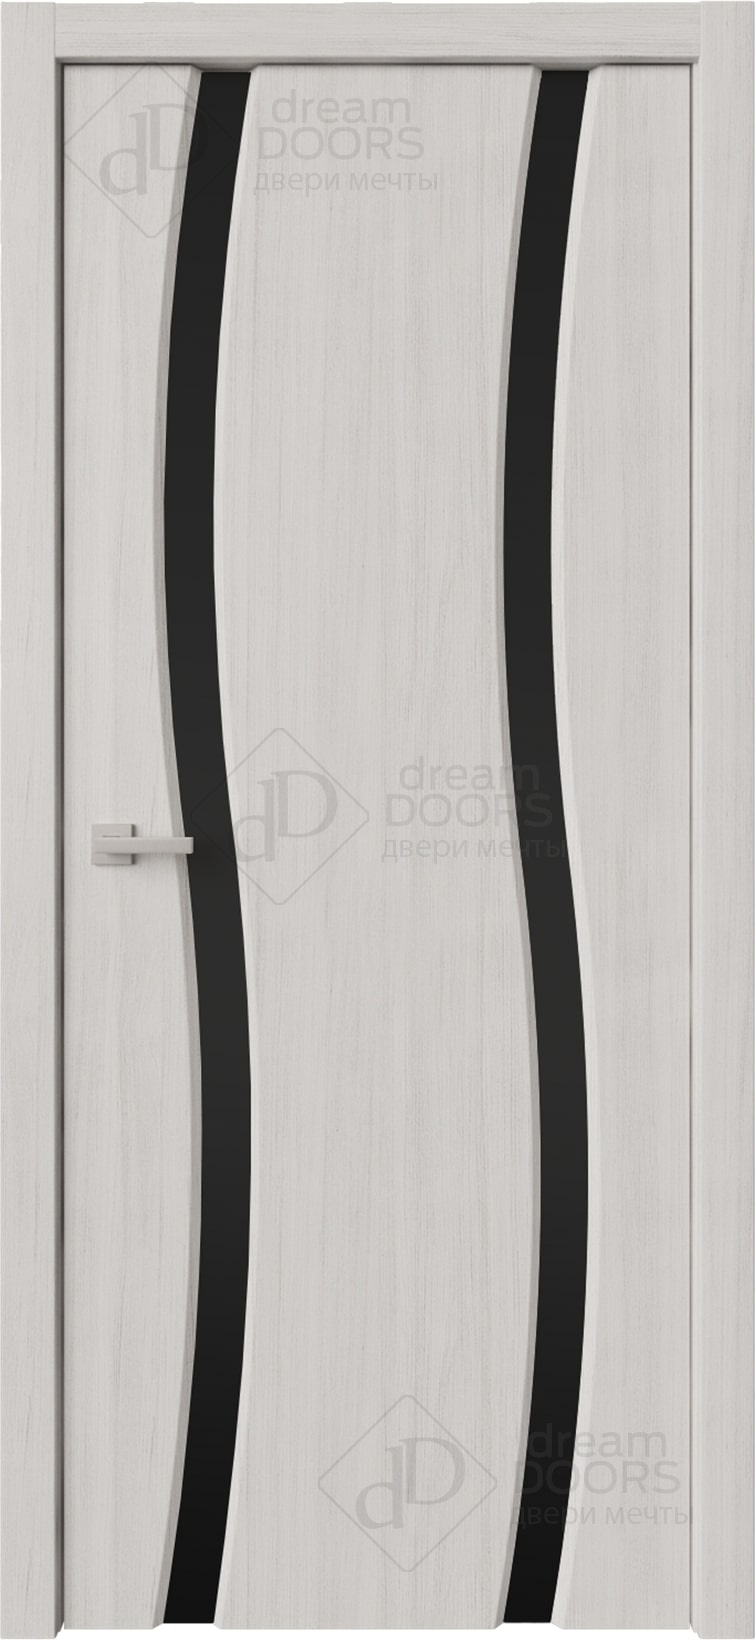 Dream Doors Межкомнатная дверь Сириус 2 Волна узкое ДО, арт. 20084 - фото №6